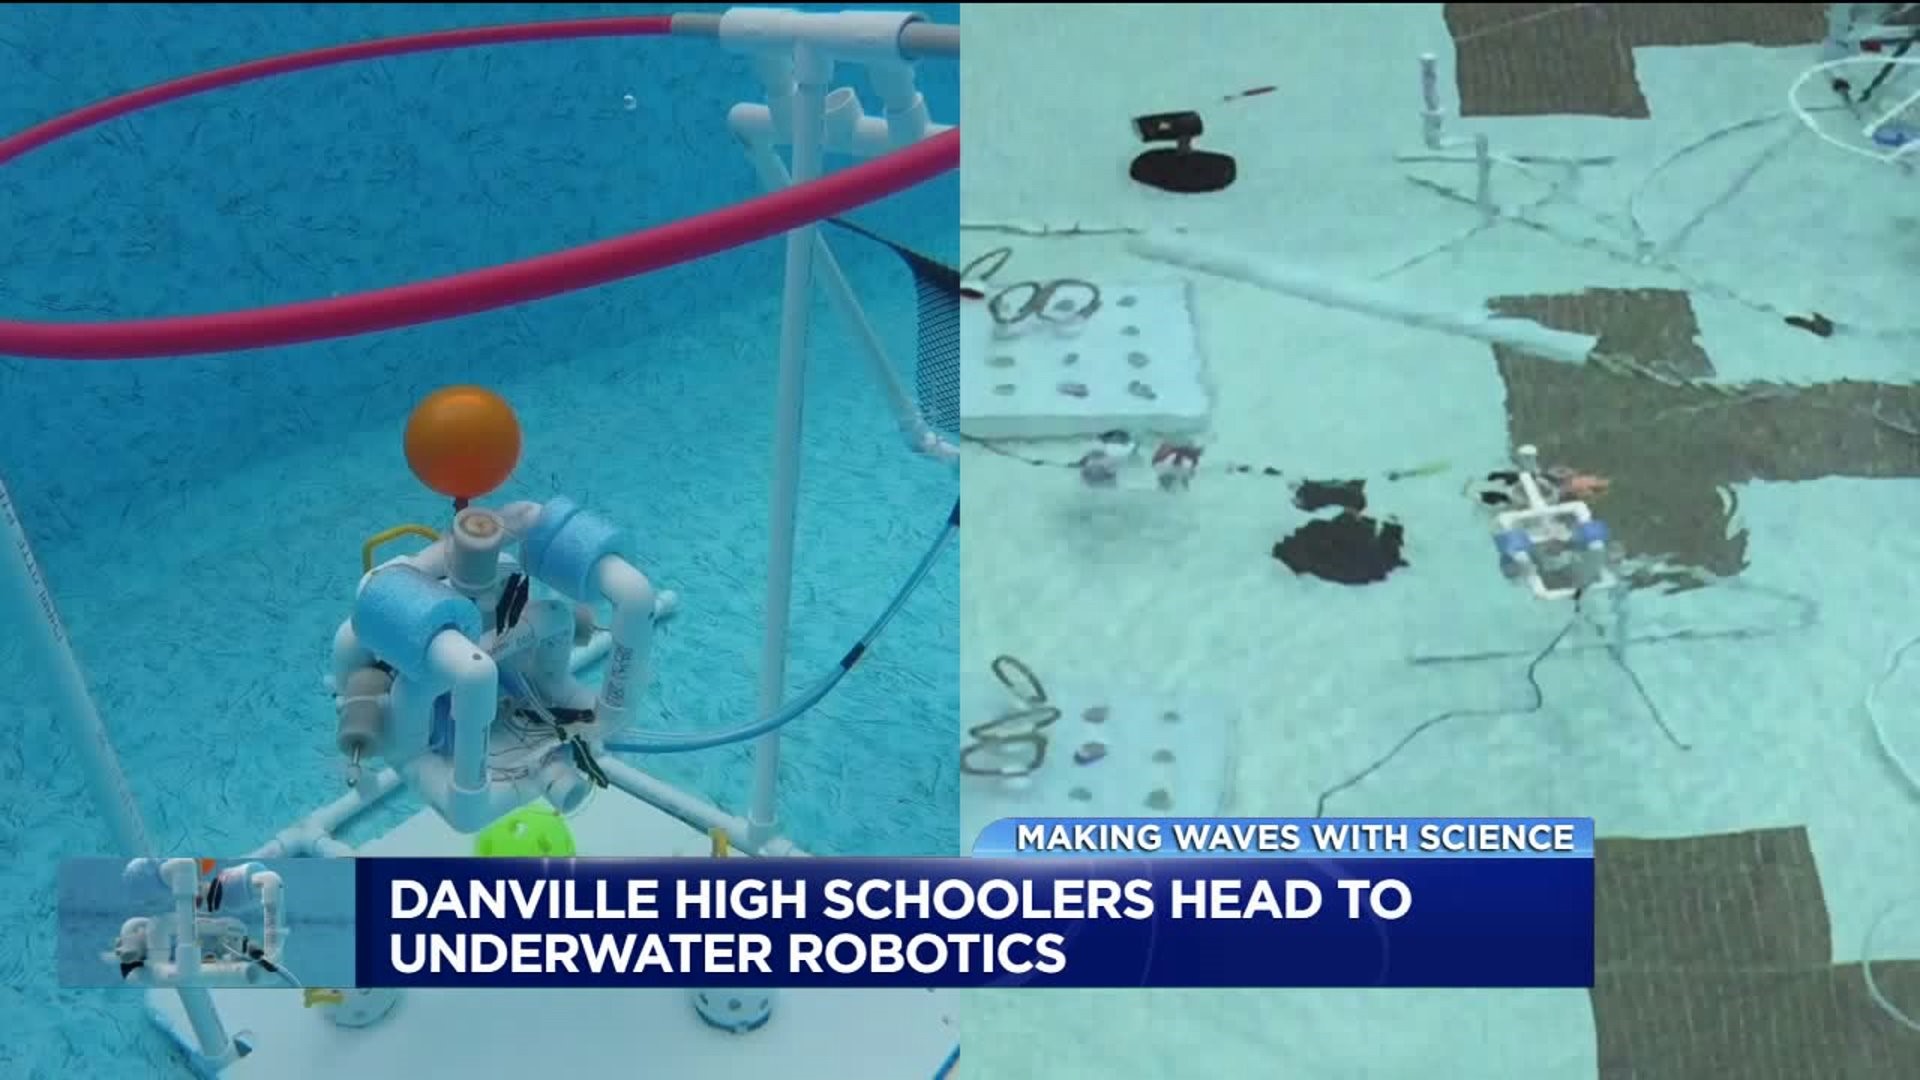 Danville High Schoolers Prep for International Underwater Robotics Competition